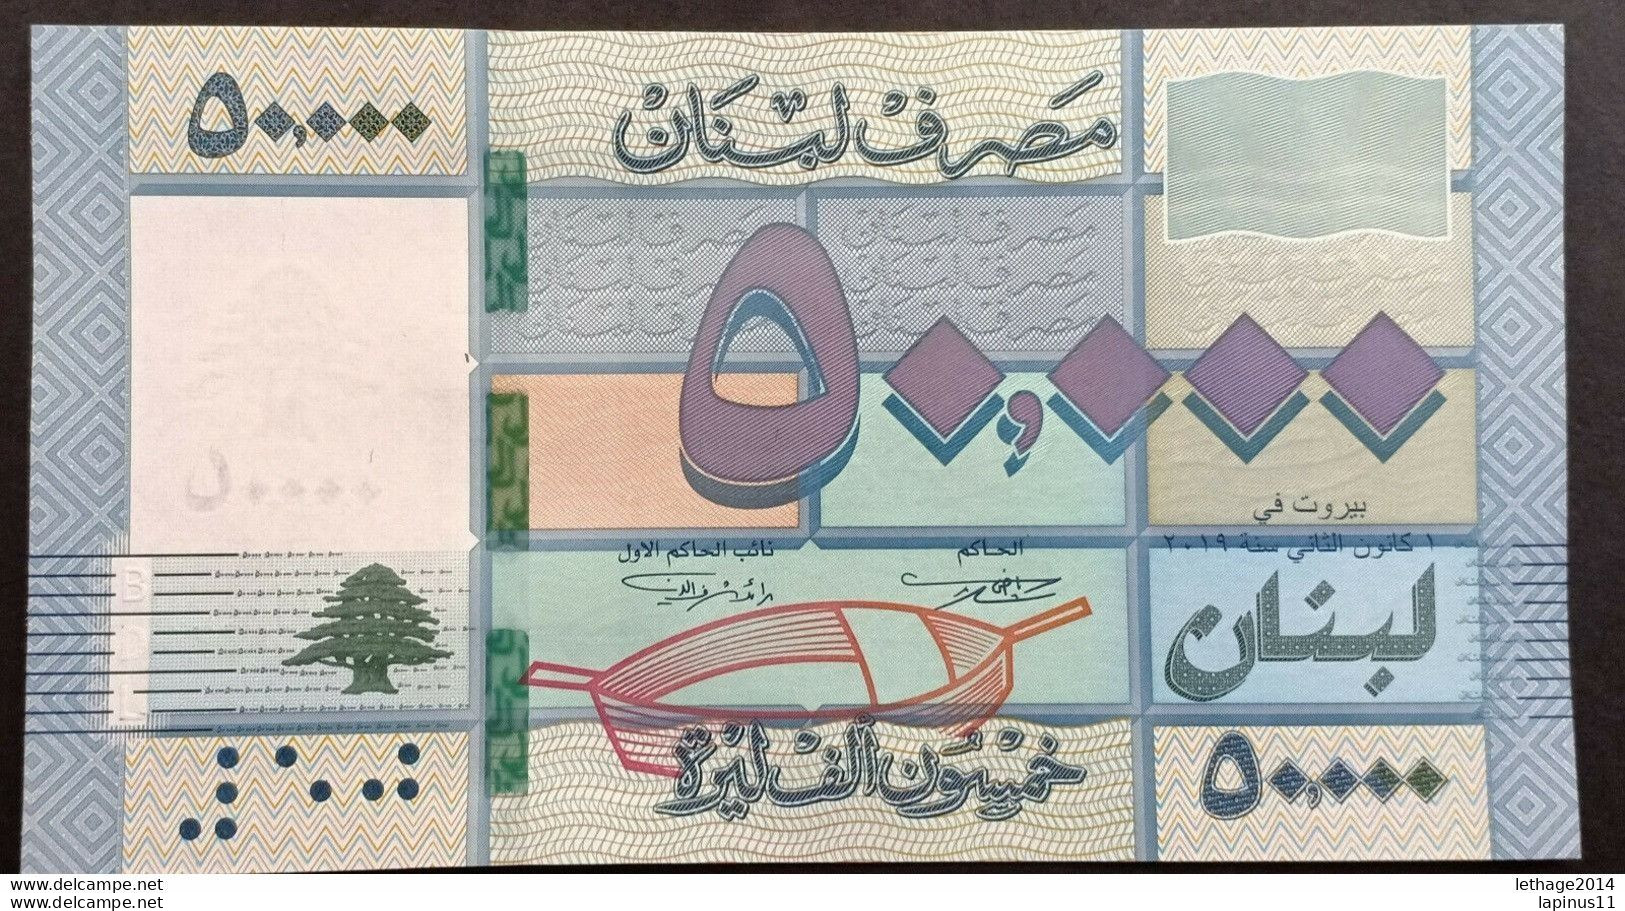 Just Issued, Lebanon 50000 Livres 2019 UNC New EARLY RELEASE Banknote Prefix D0 - Jordan